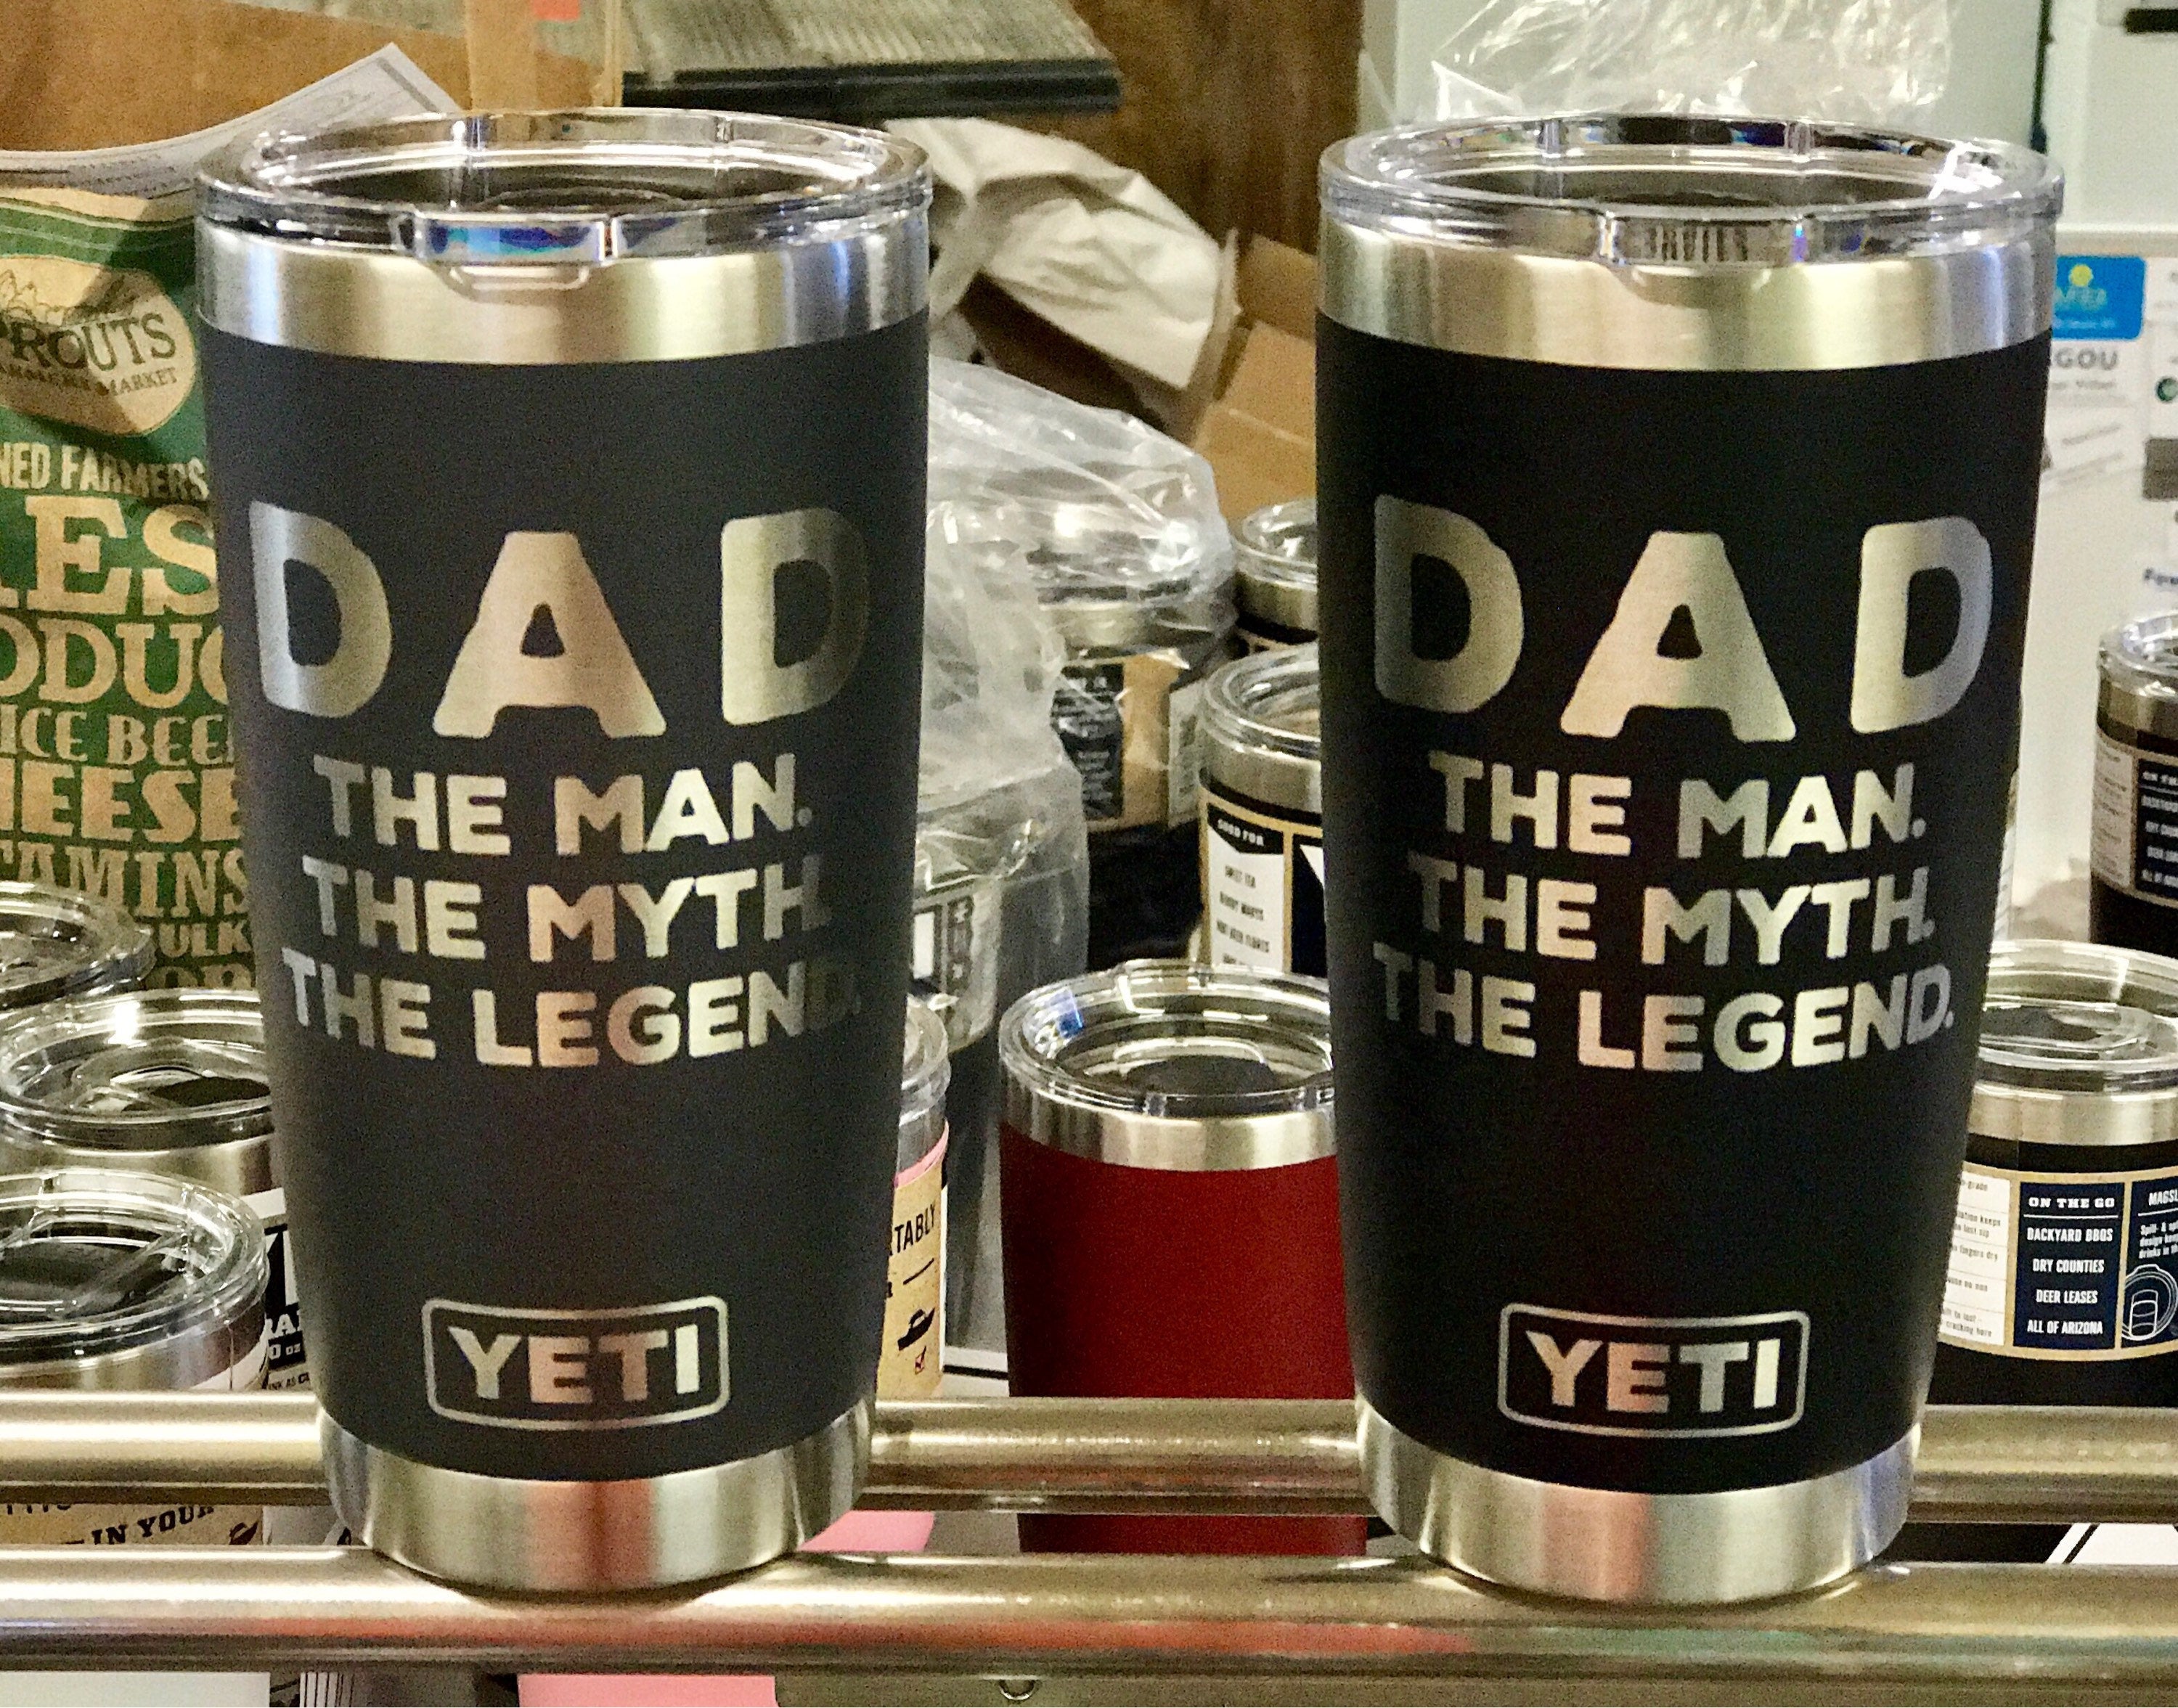 Papa, the Man, the Myth, the Legend Travel Coffee Mug Father's Day